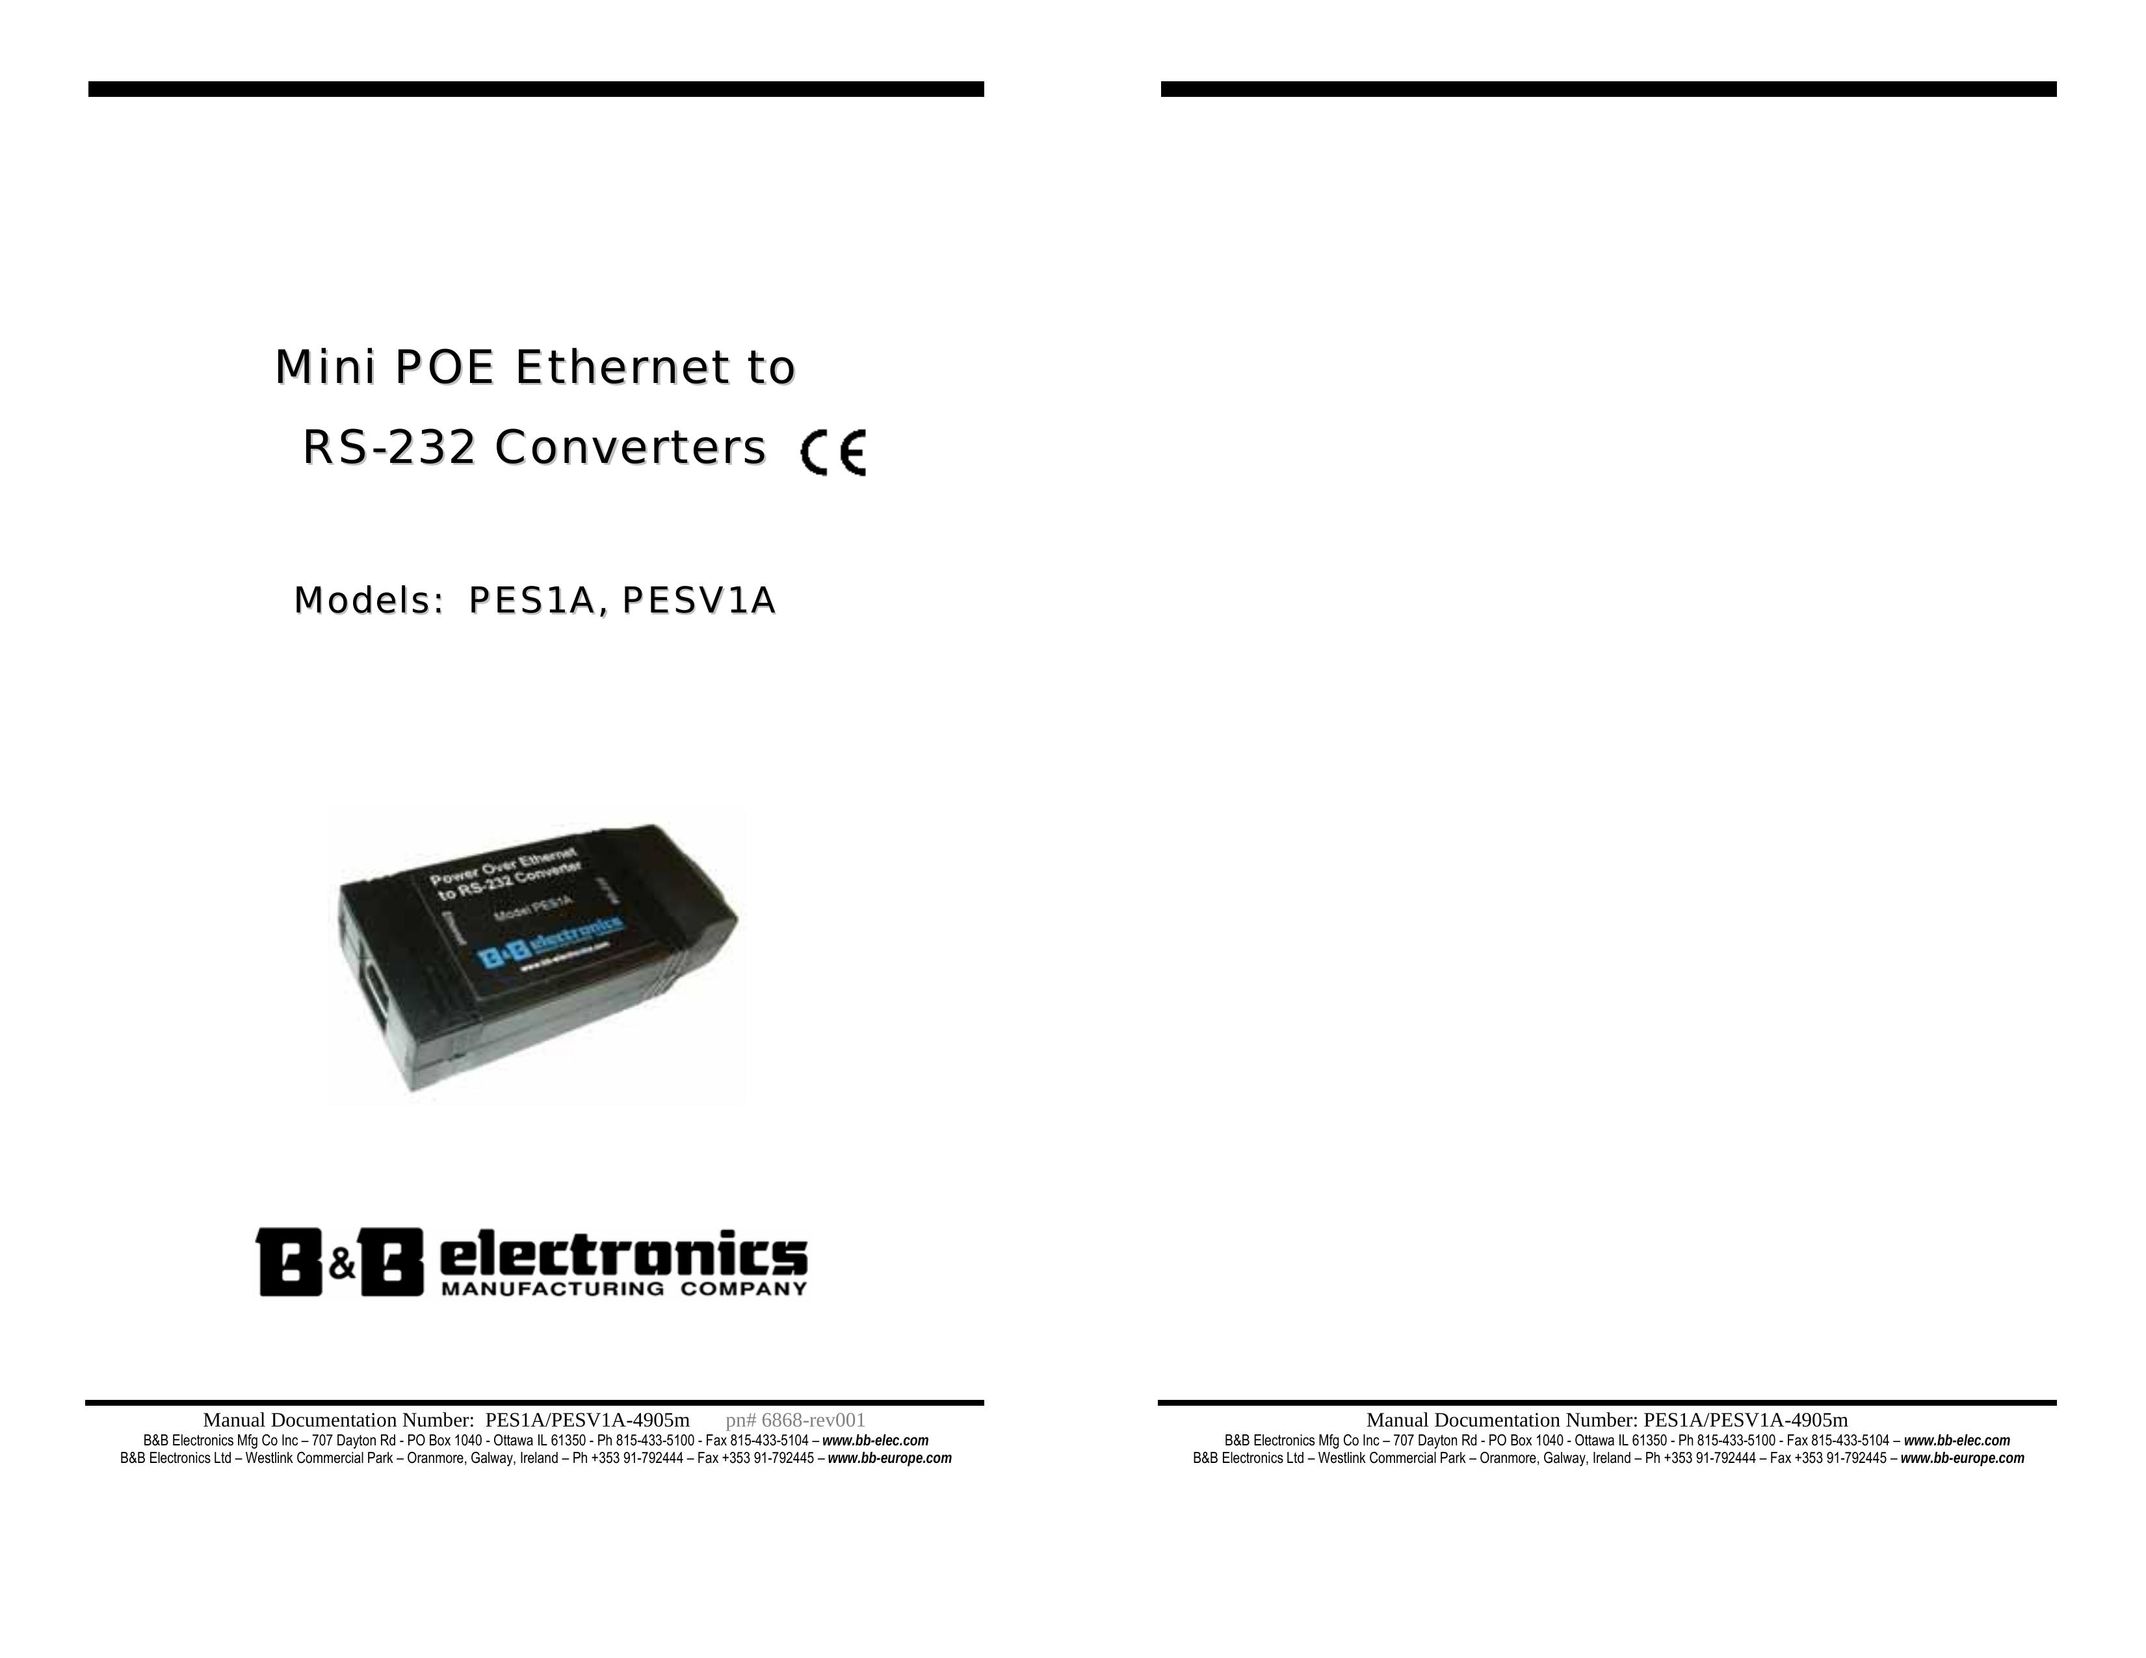 B&B Electronics Mini POE Ethernet to RS--232 Converters Computer Hardware User Manual